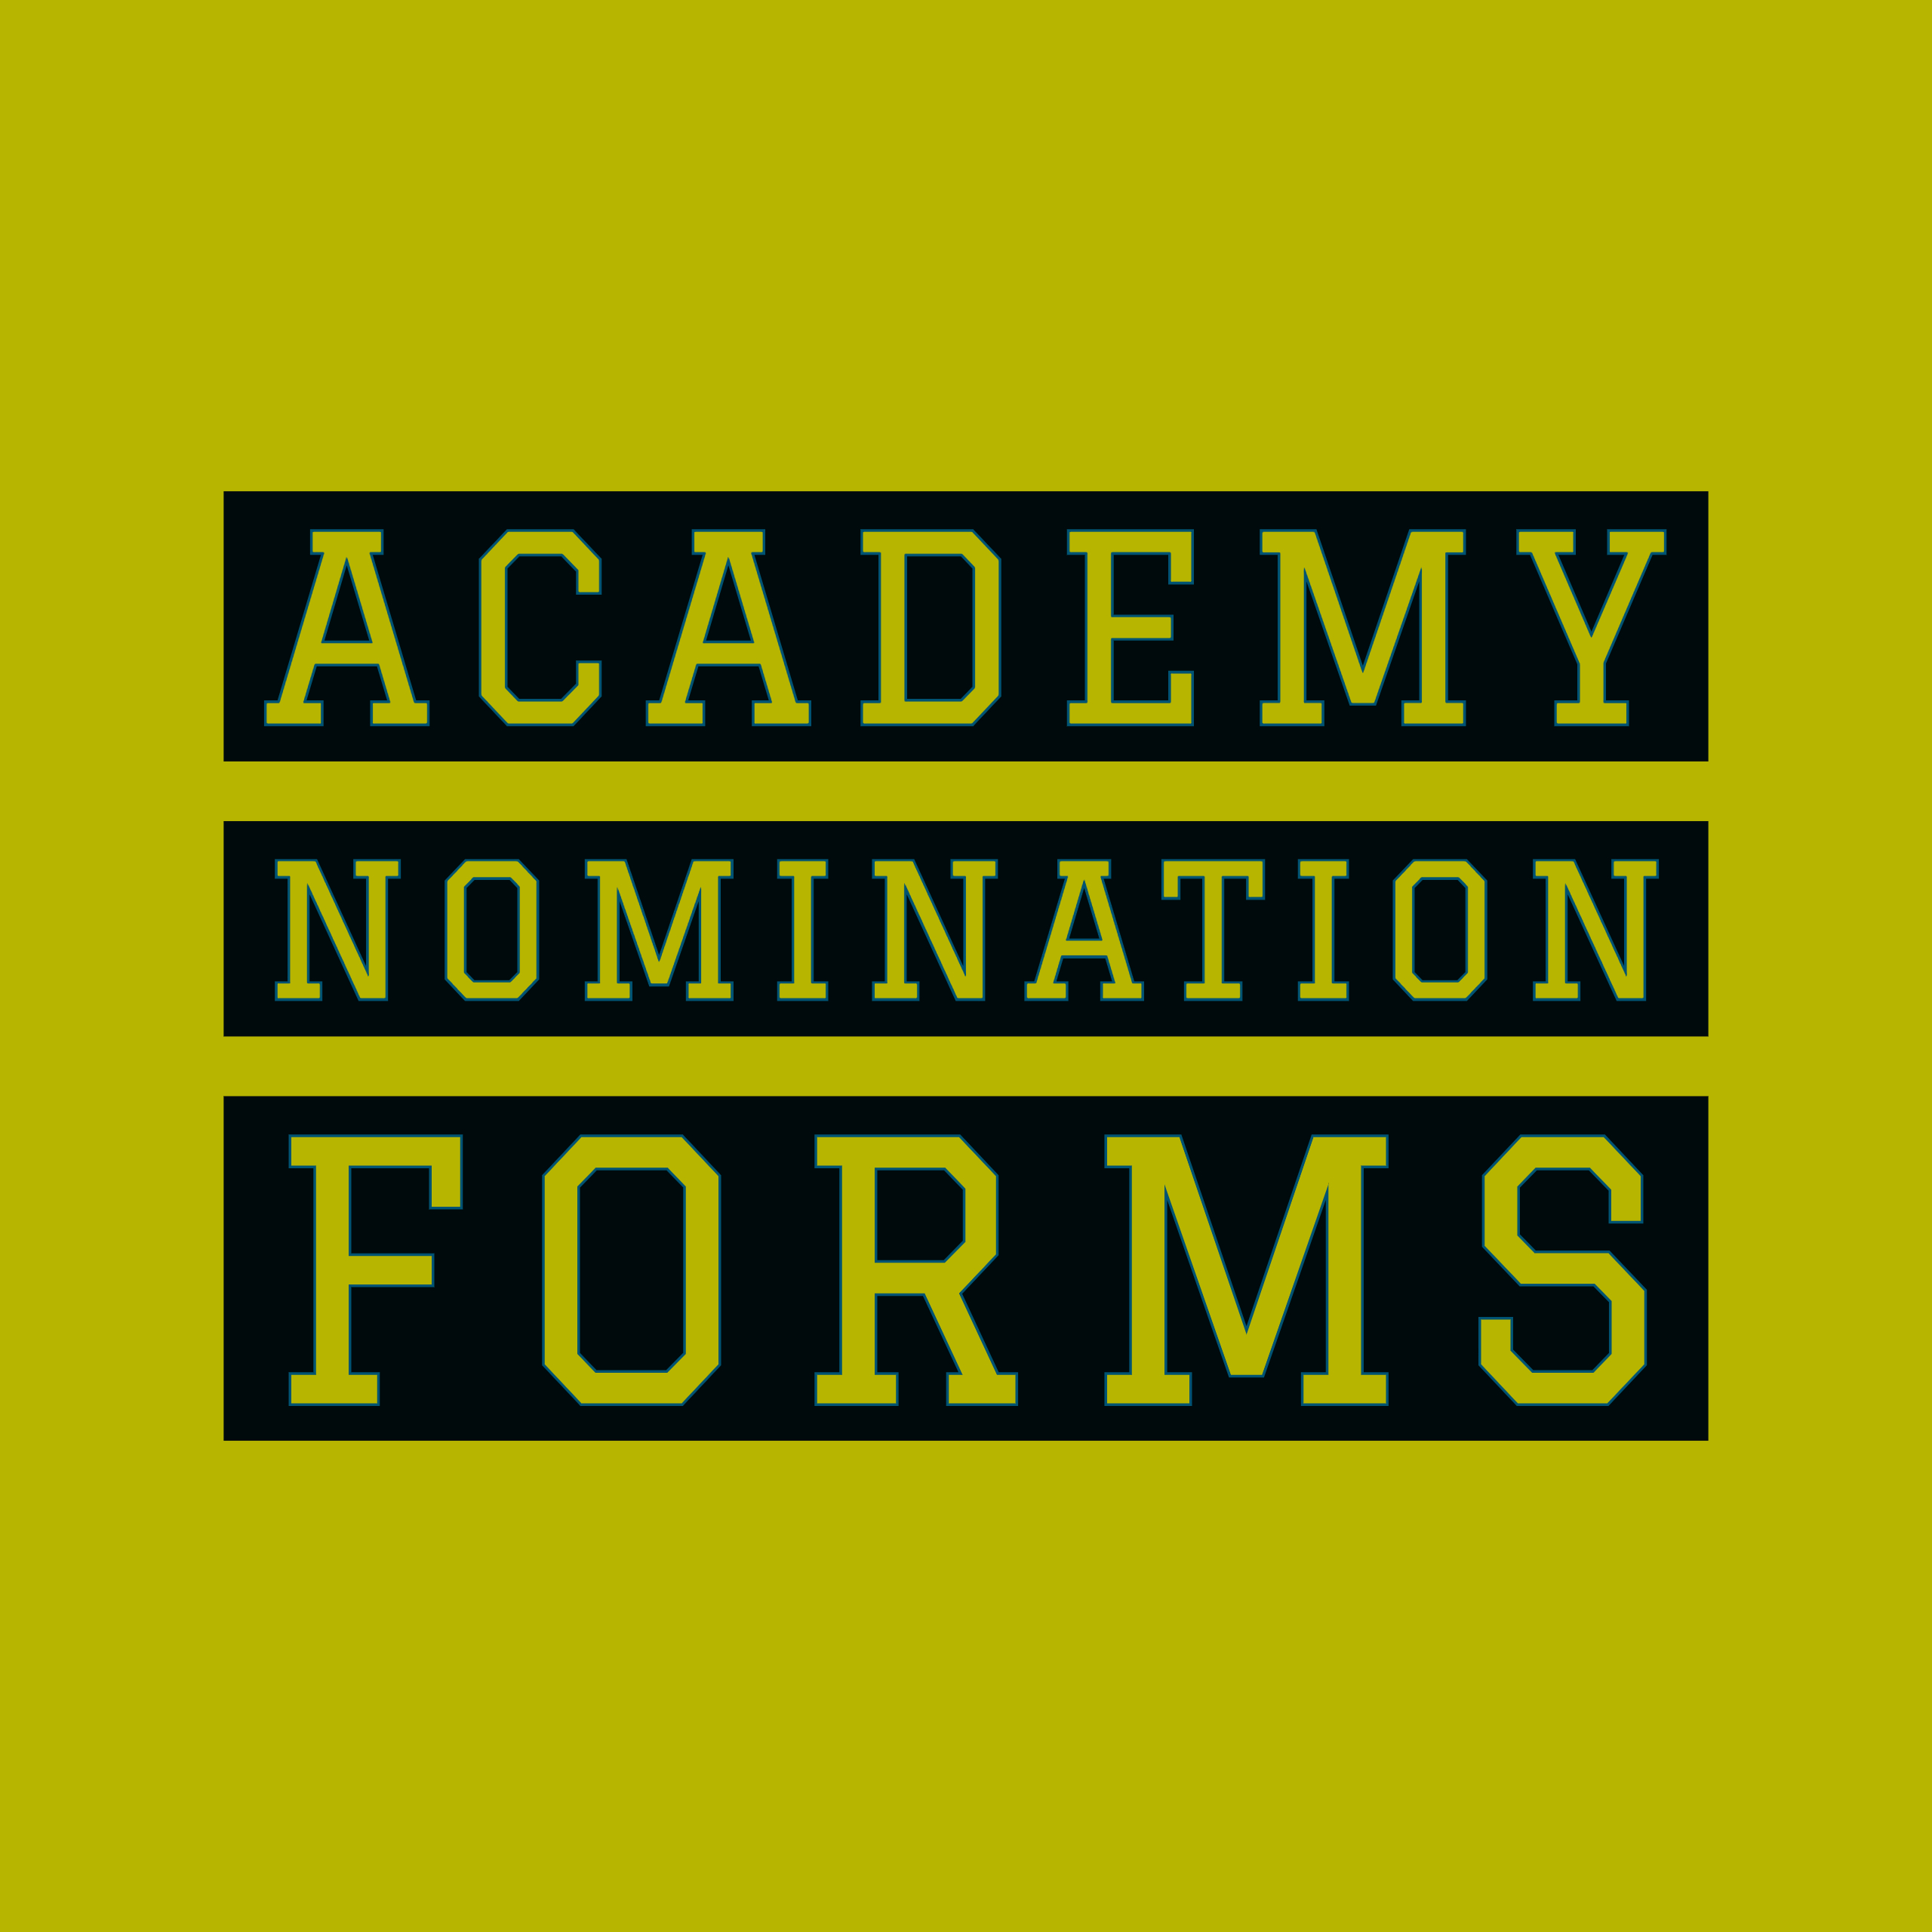 Academy Nomination Form